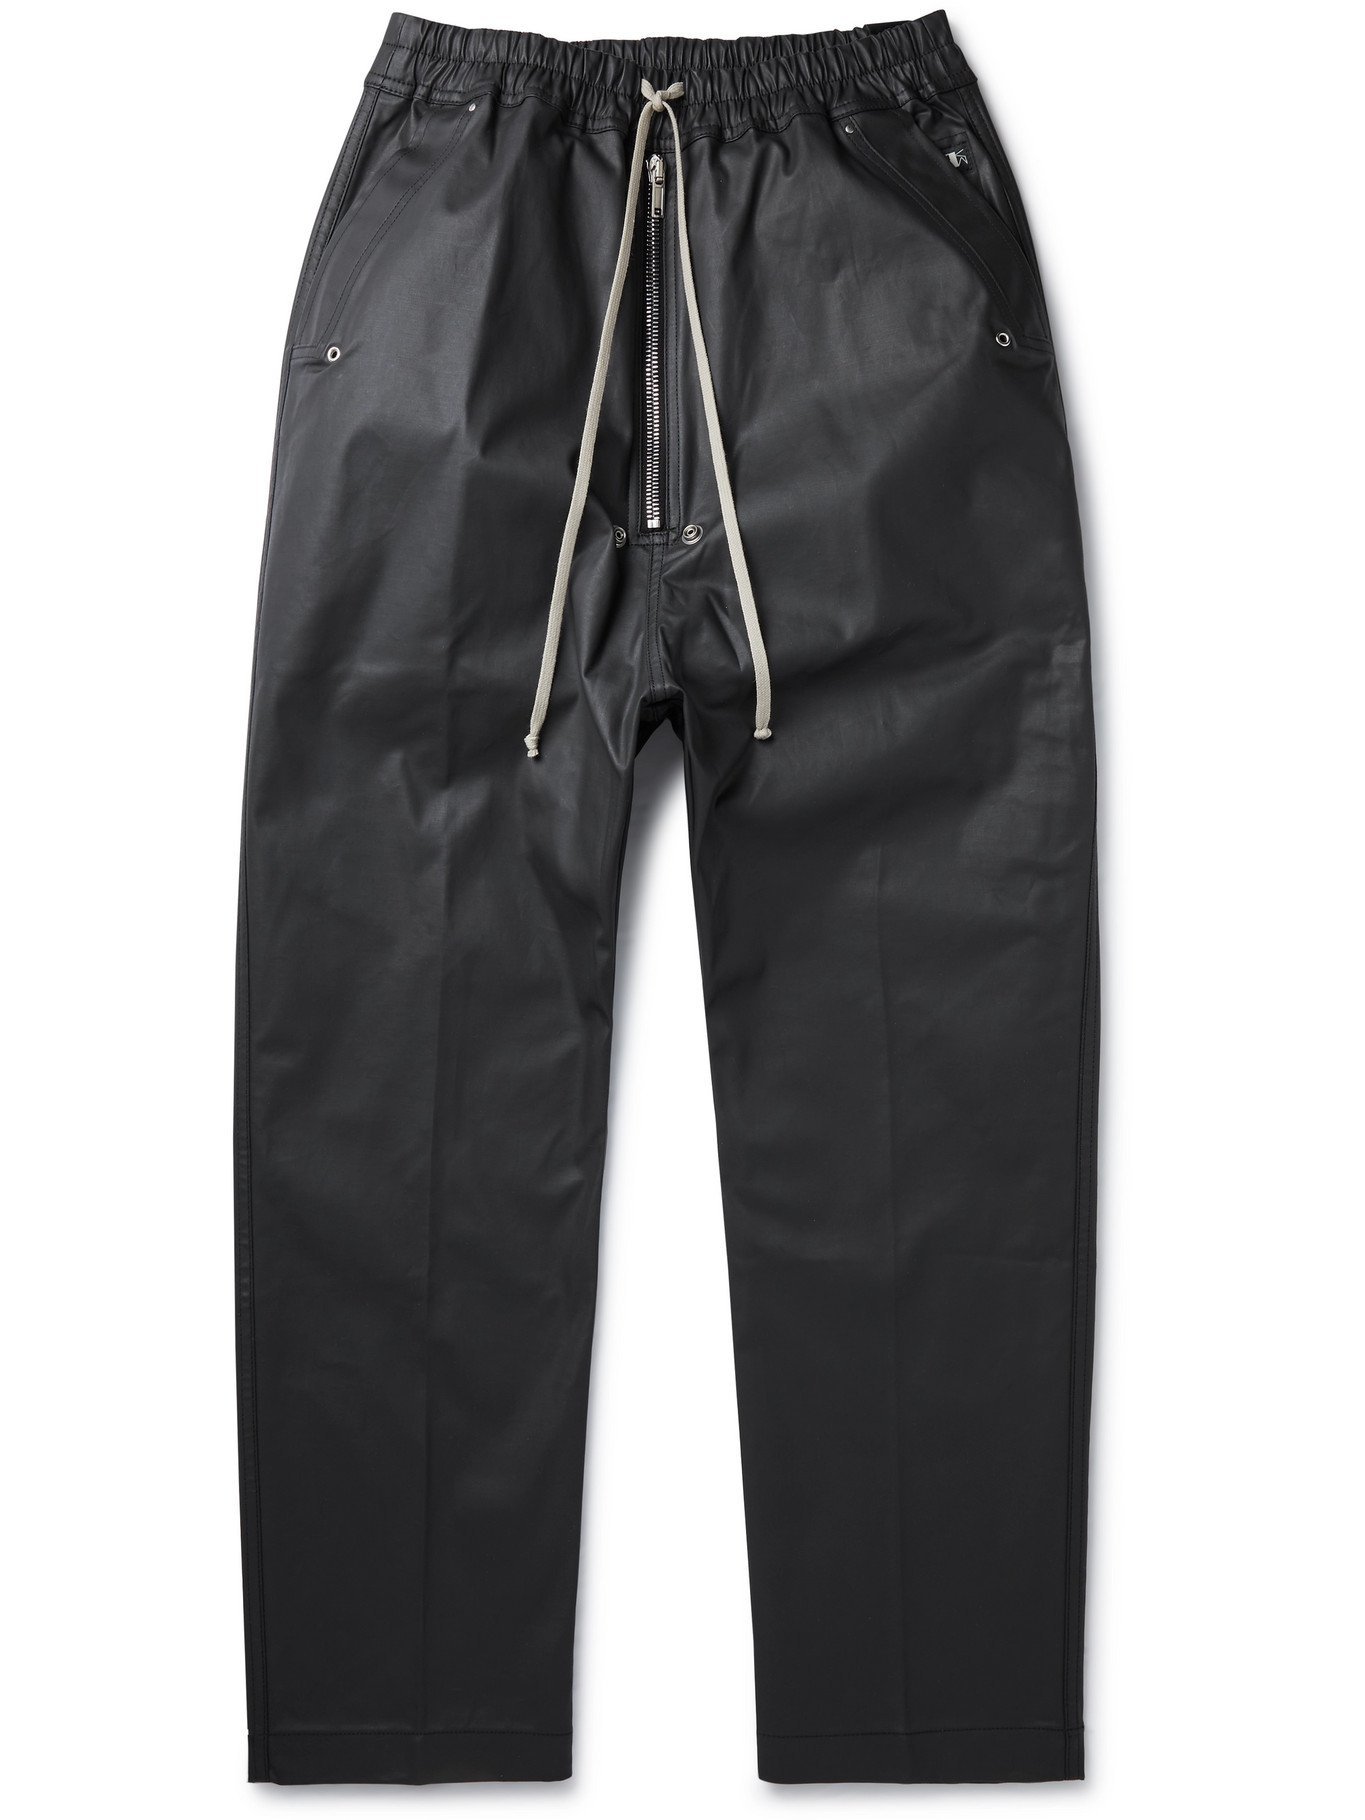 DRKSHDW BY RICK OWENS - Bela Waxed Cotton-Blend Trousers - Black 